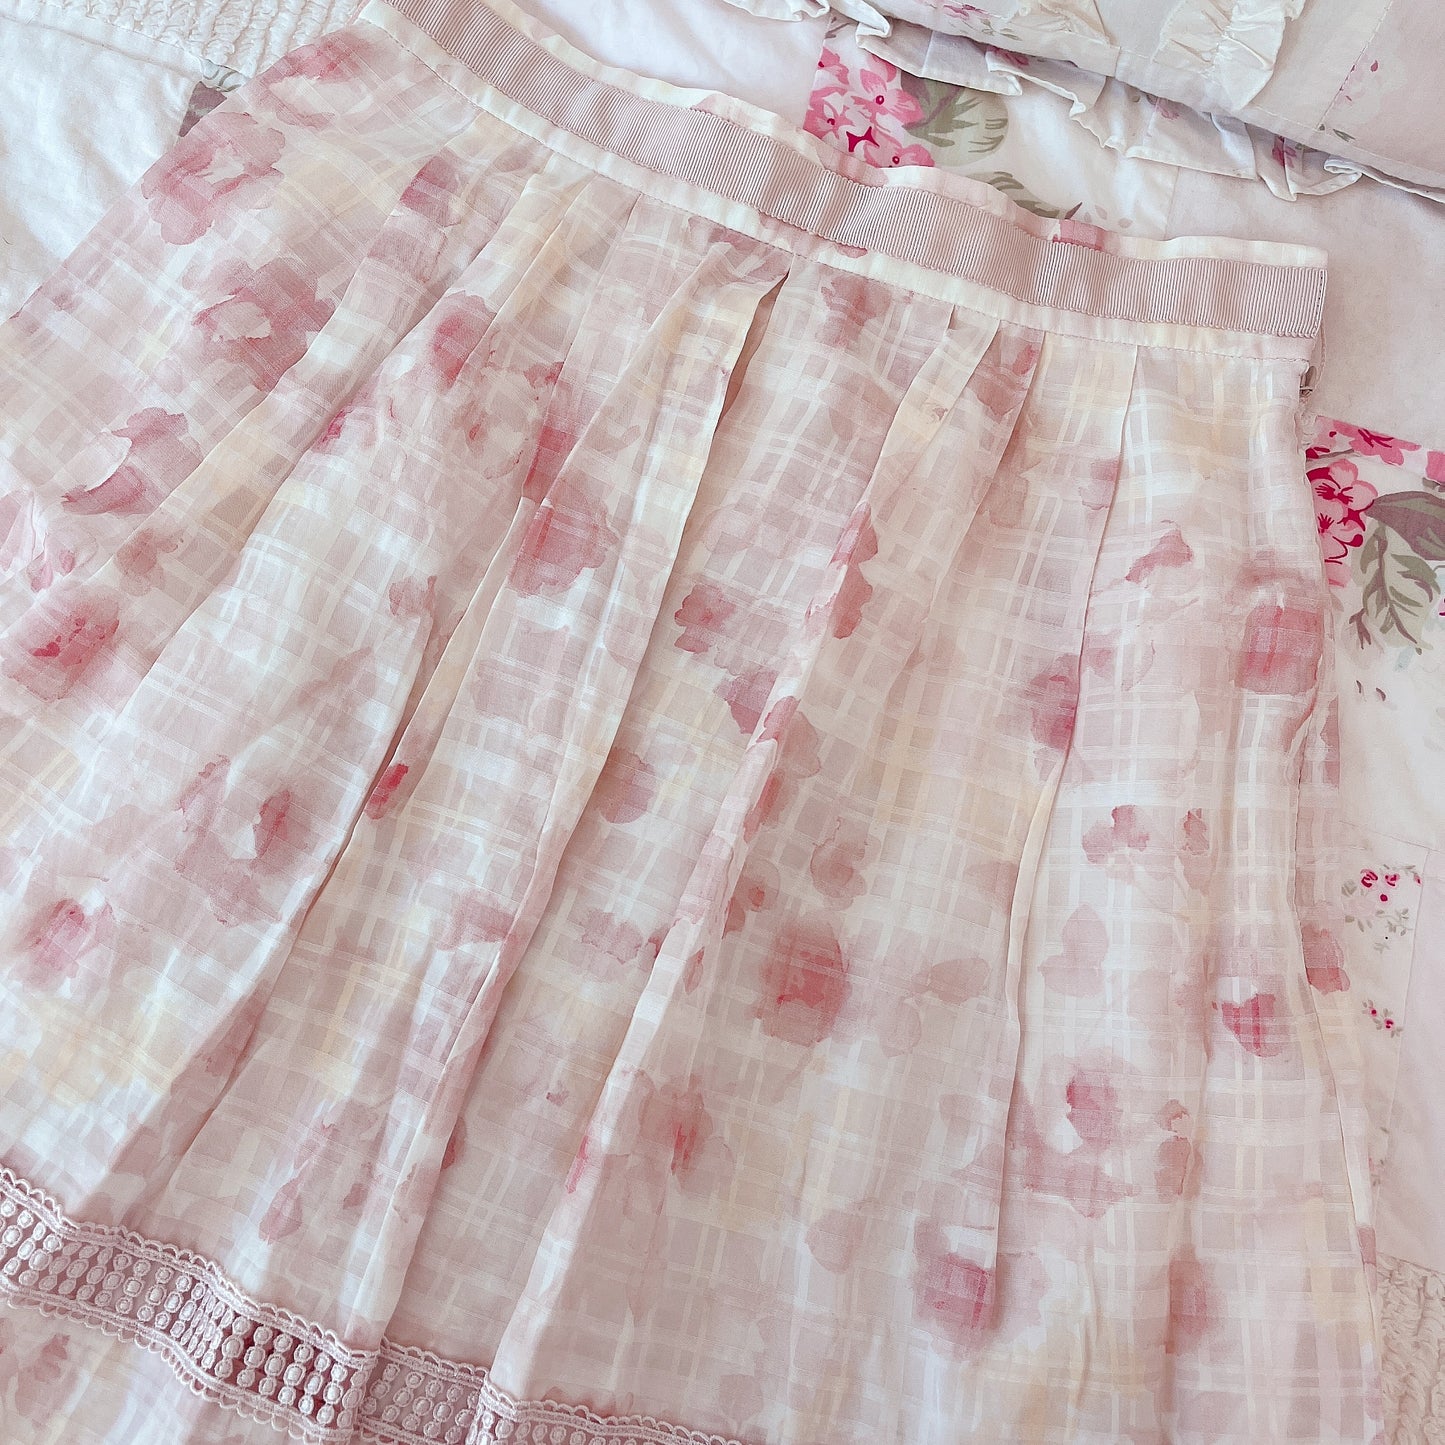 pink floral knee-length skirt